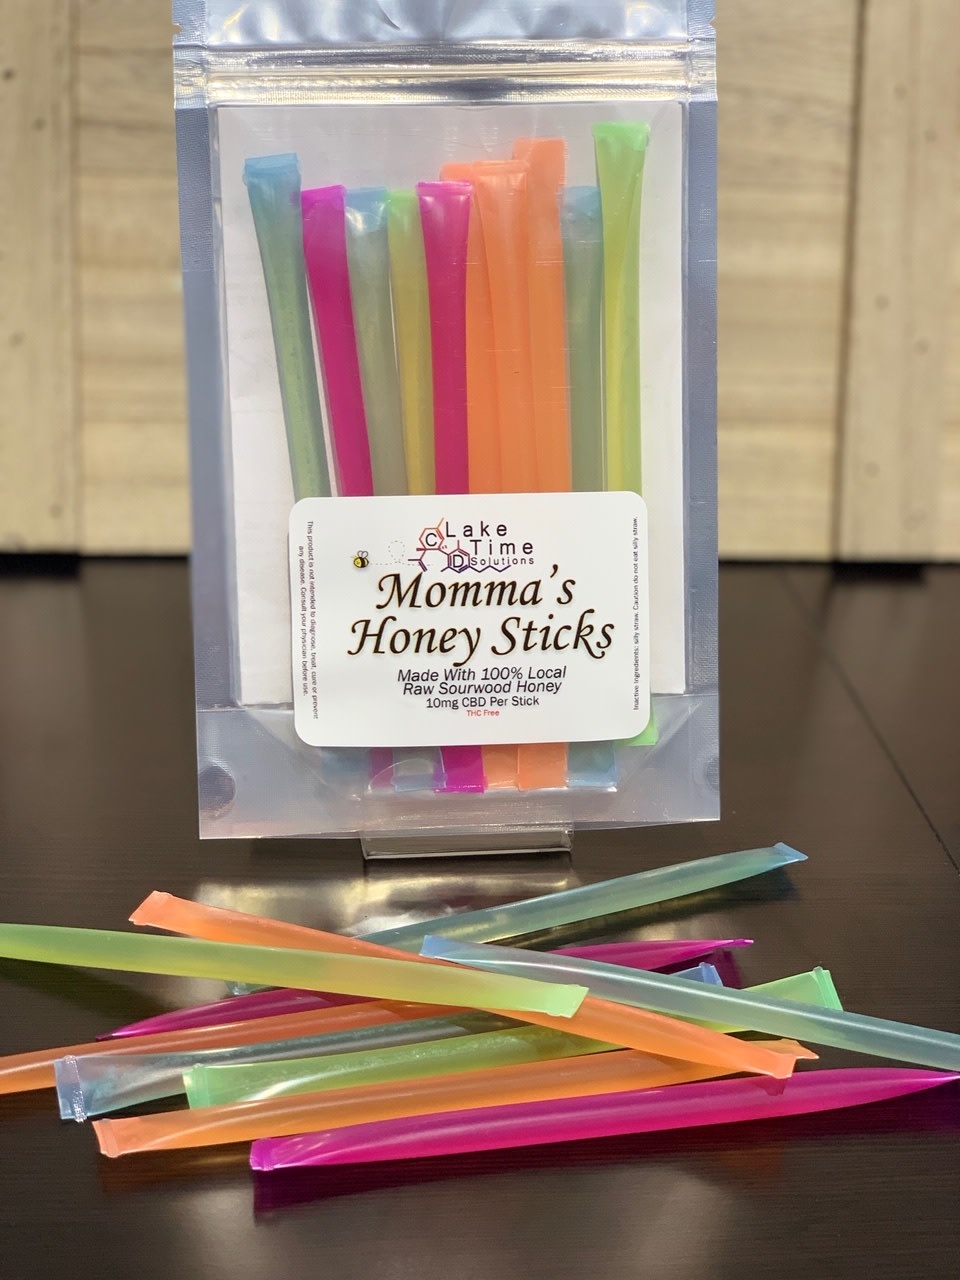 Momma's Momma's Honey Sticks - 10ct/ 150mg -